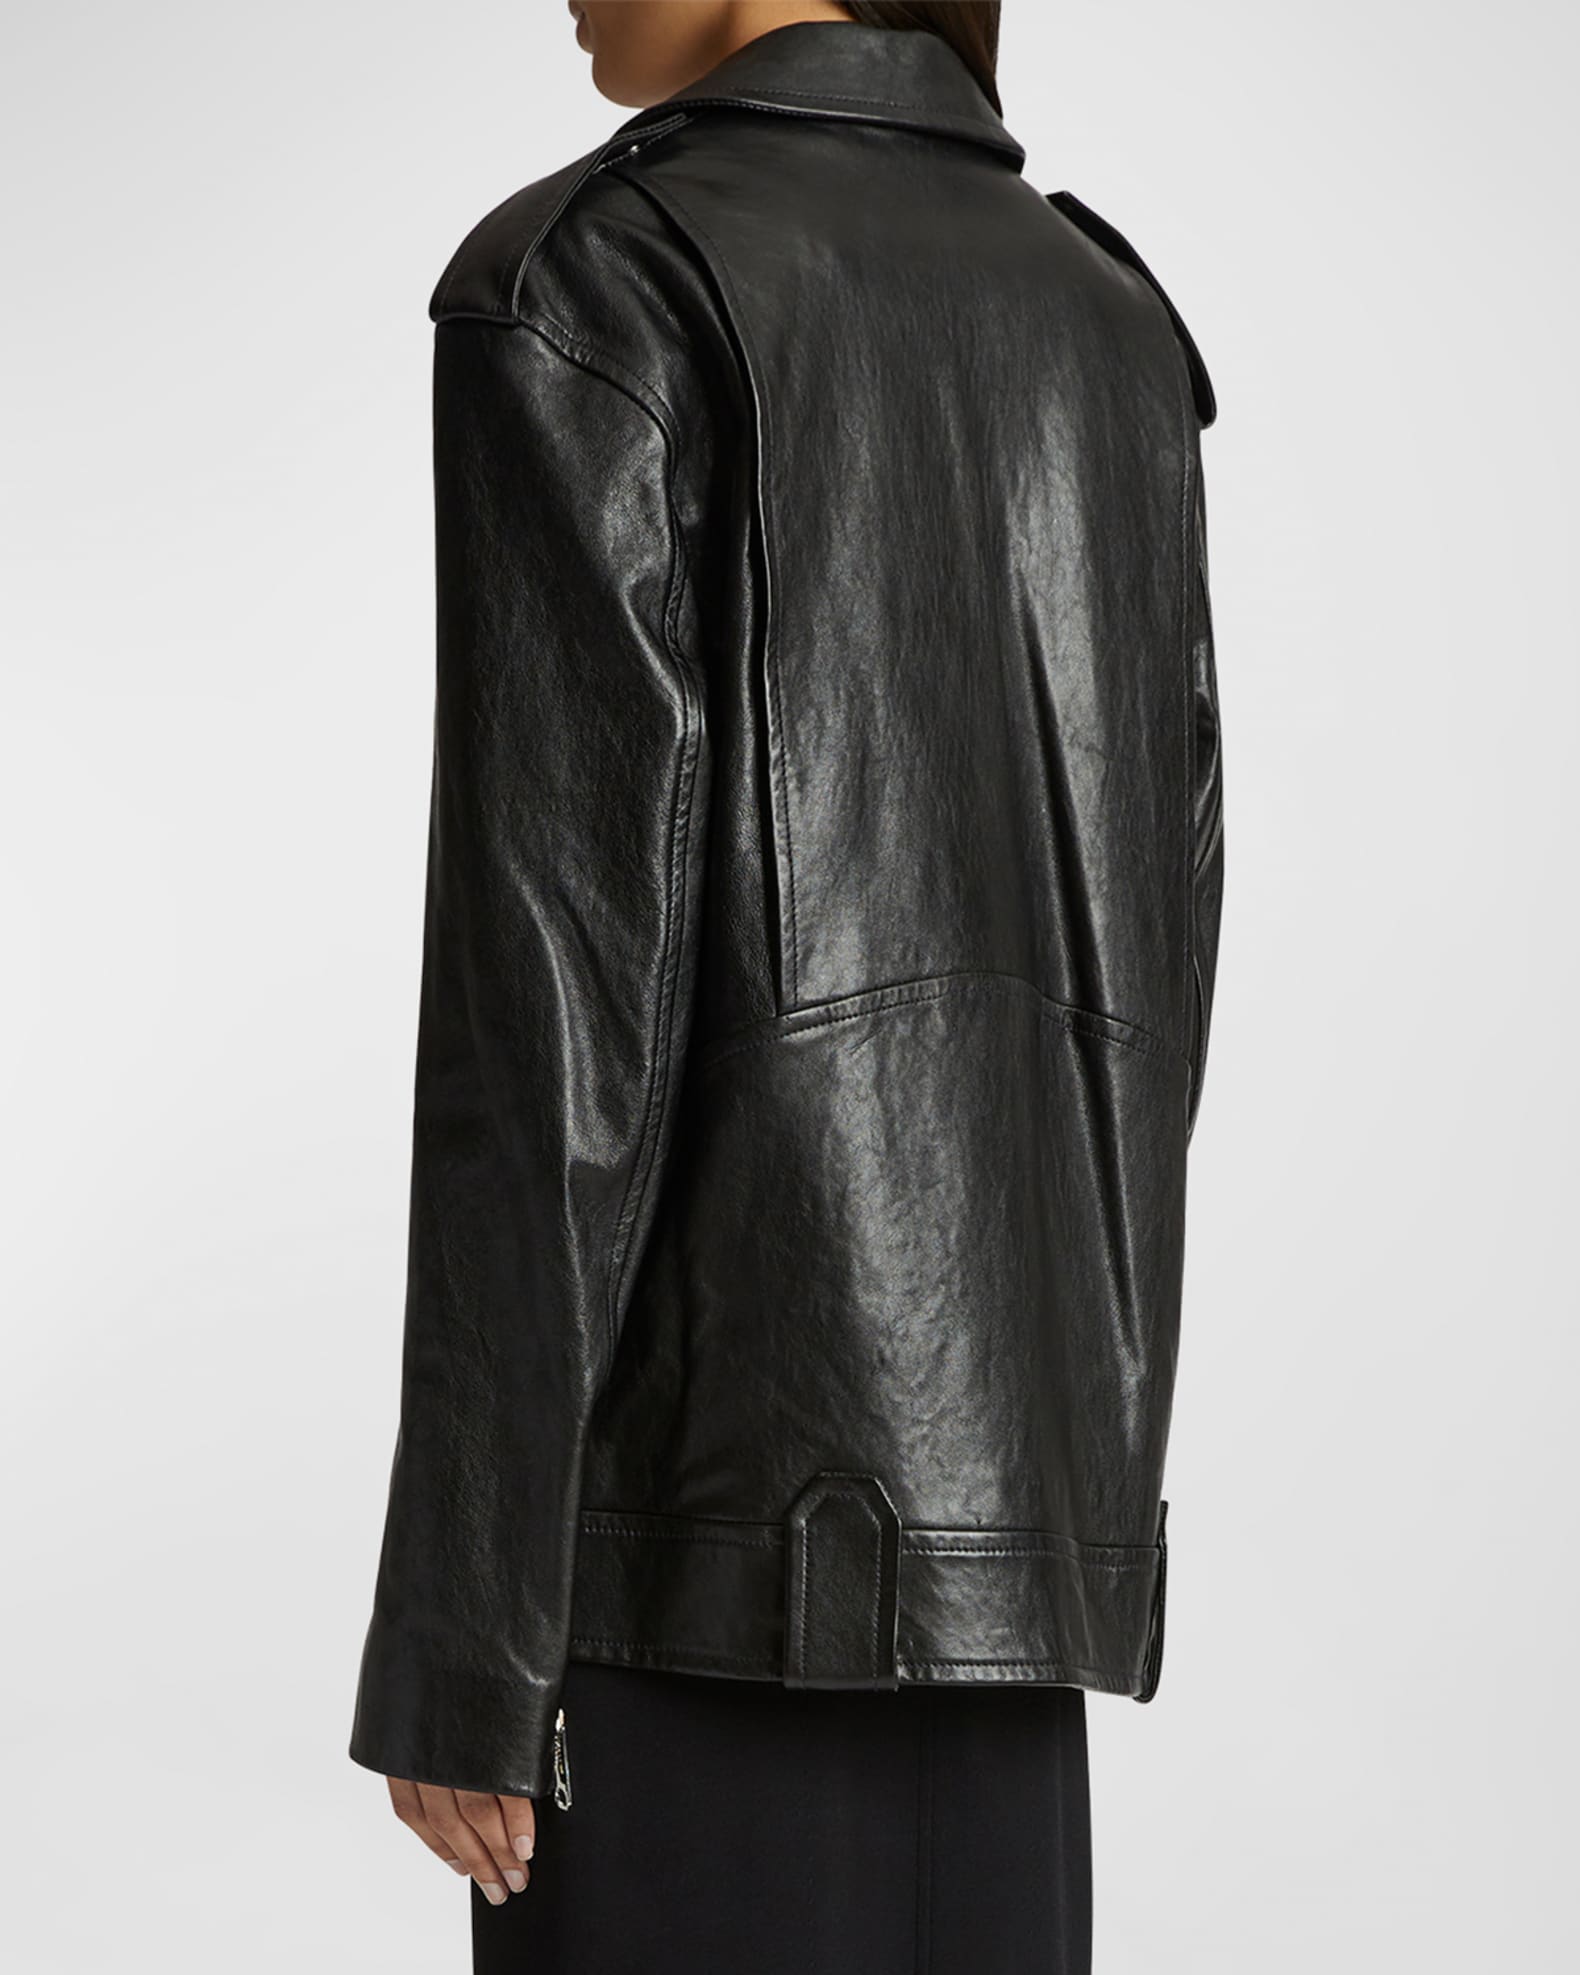 Mainetti 3320, 19 Heavy Duty Black Plastic, Jacket Coat Outerwear Han -  Mainetti USA